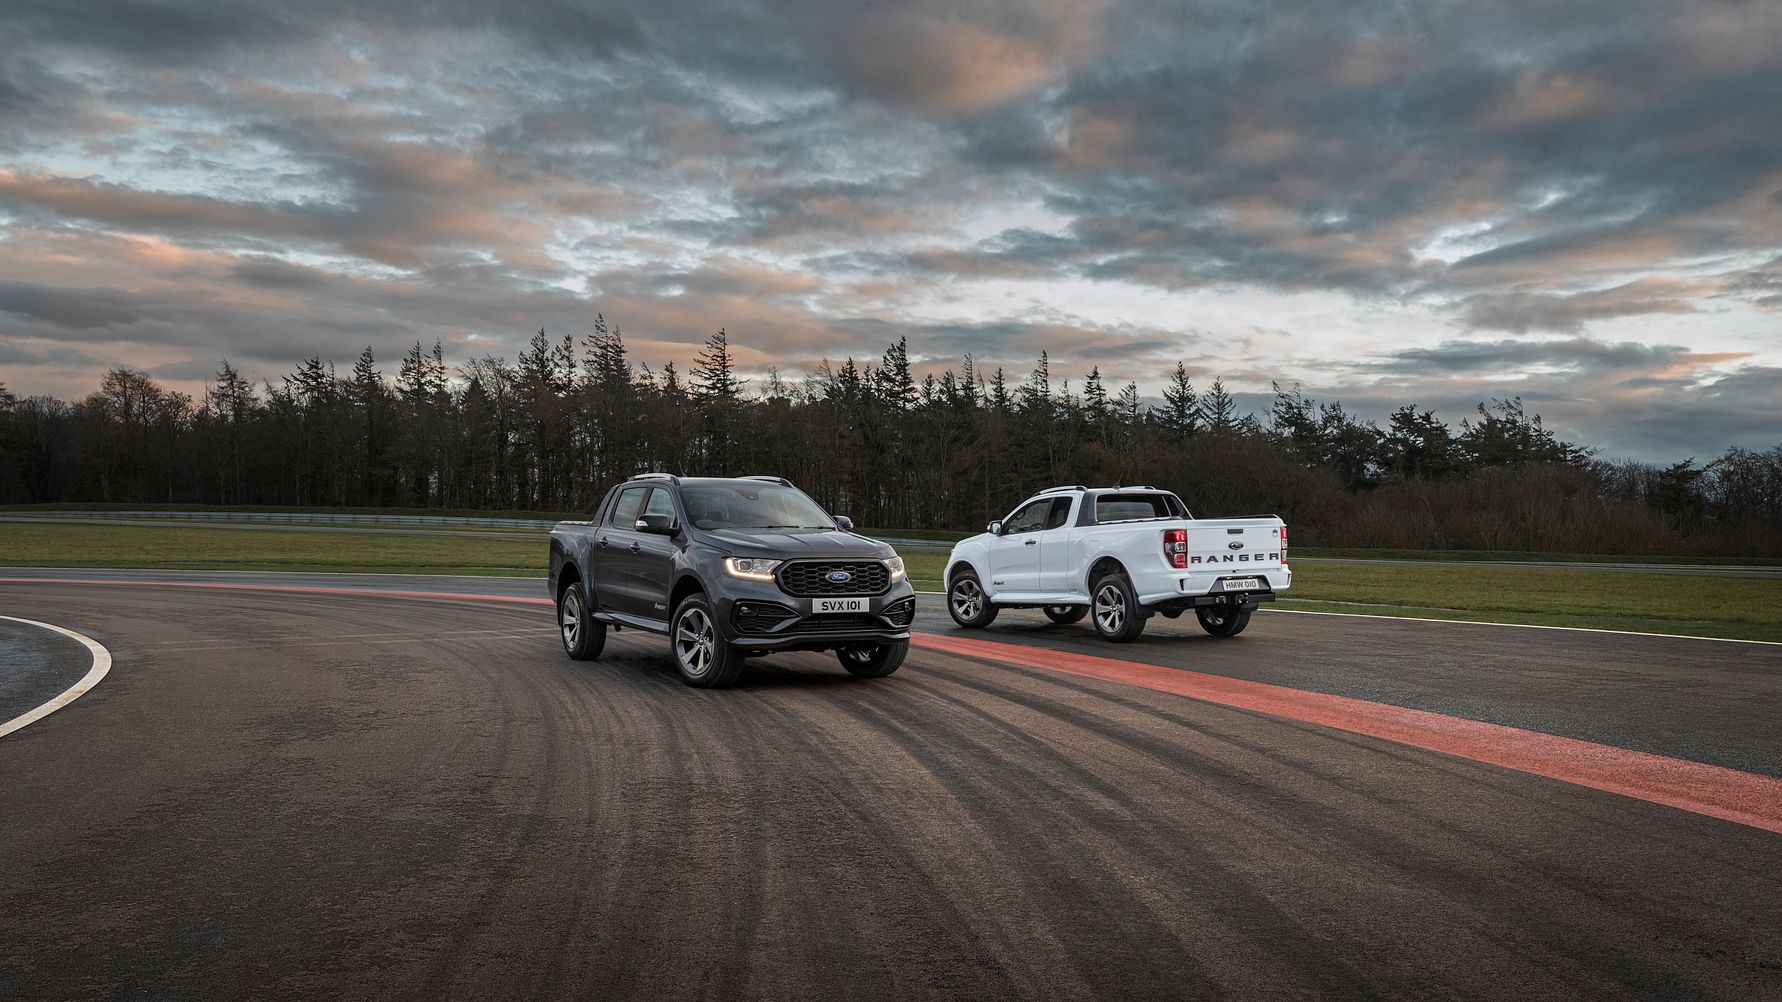 Ford anunță noul Ranger MS-RT cu design impunător, urban, inspirat din motorsport